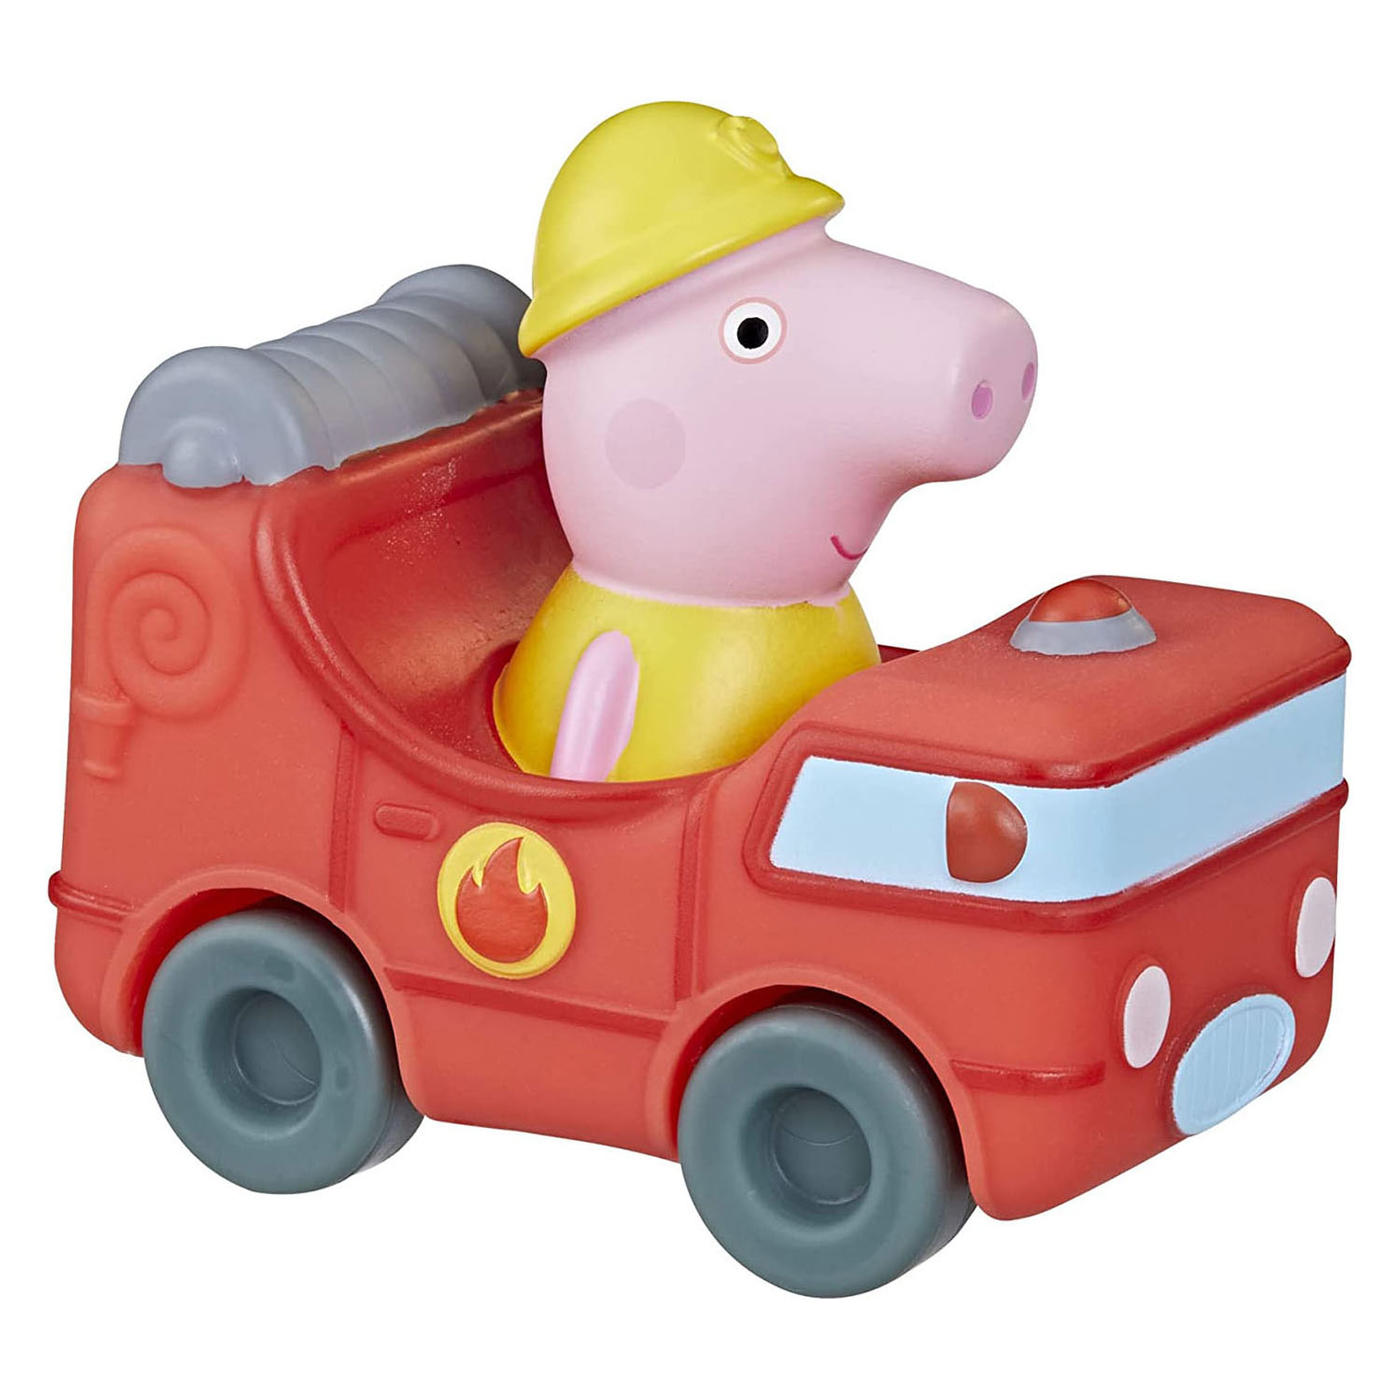  Peppa Pig Küçük Tekli Araç - Firetruck